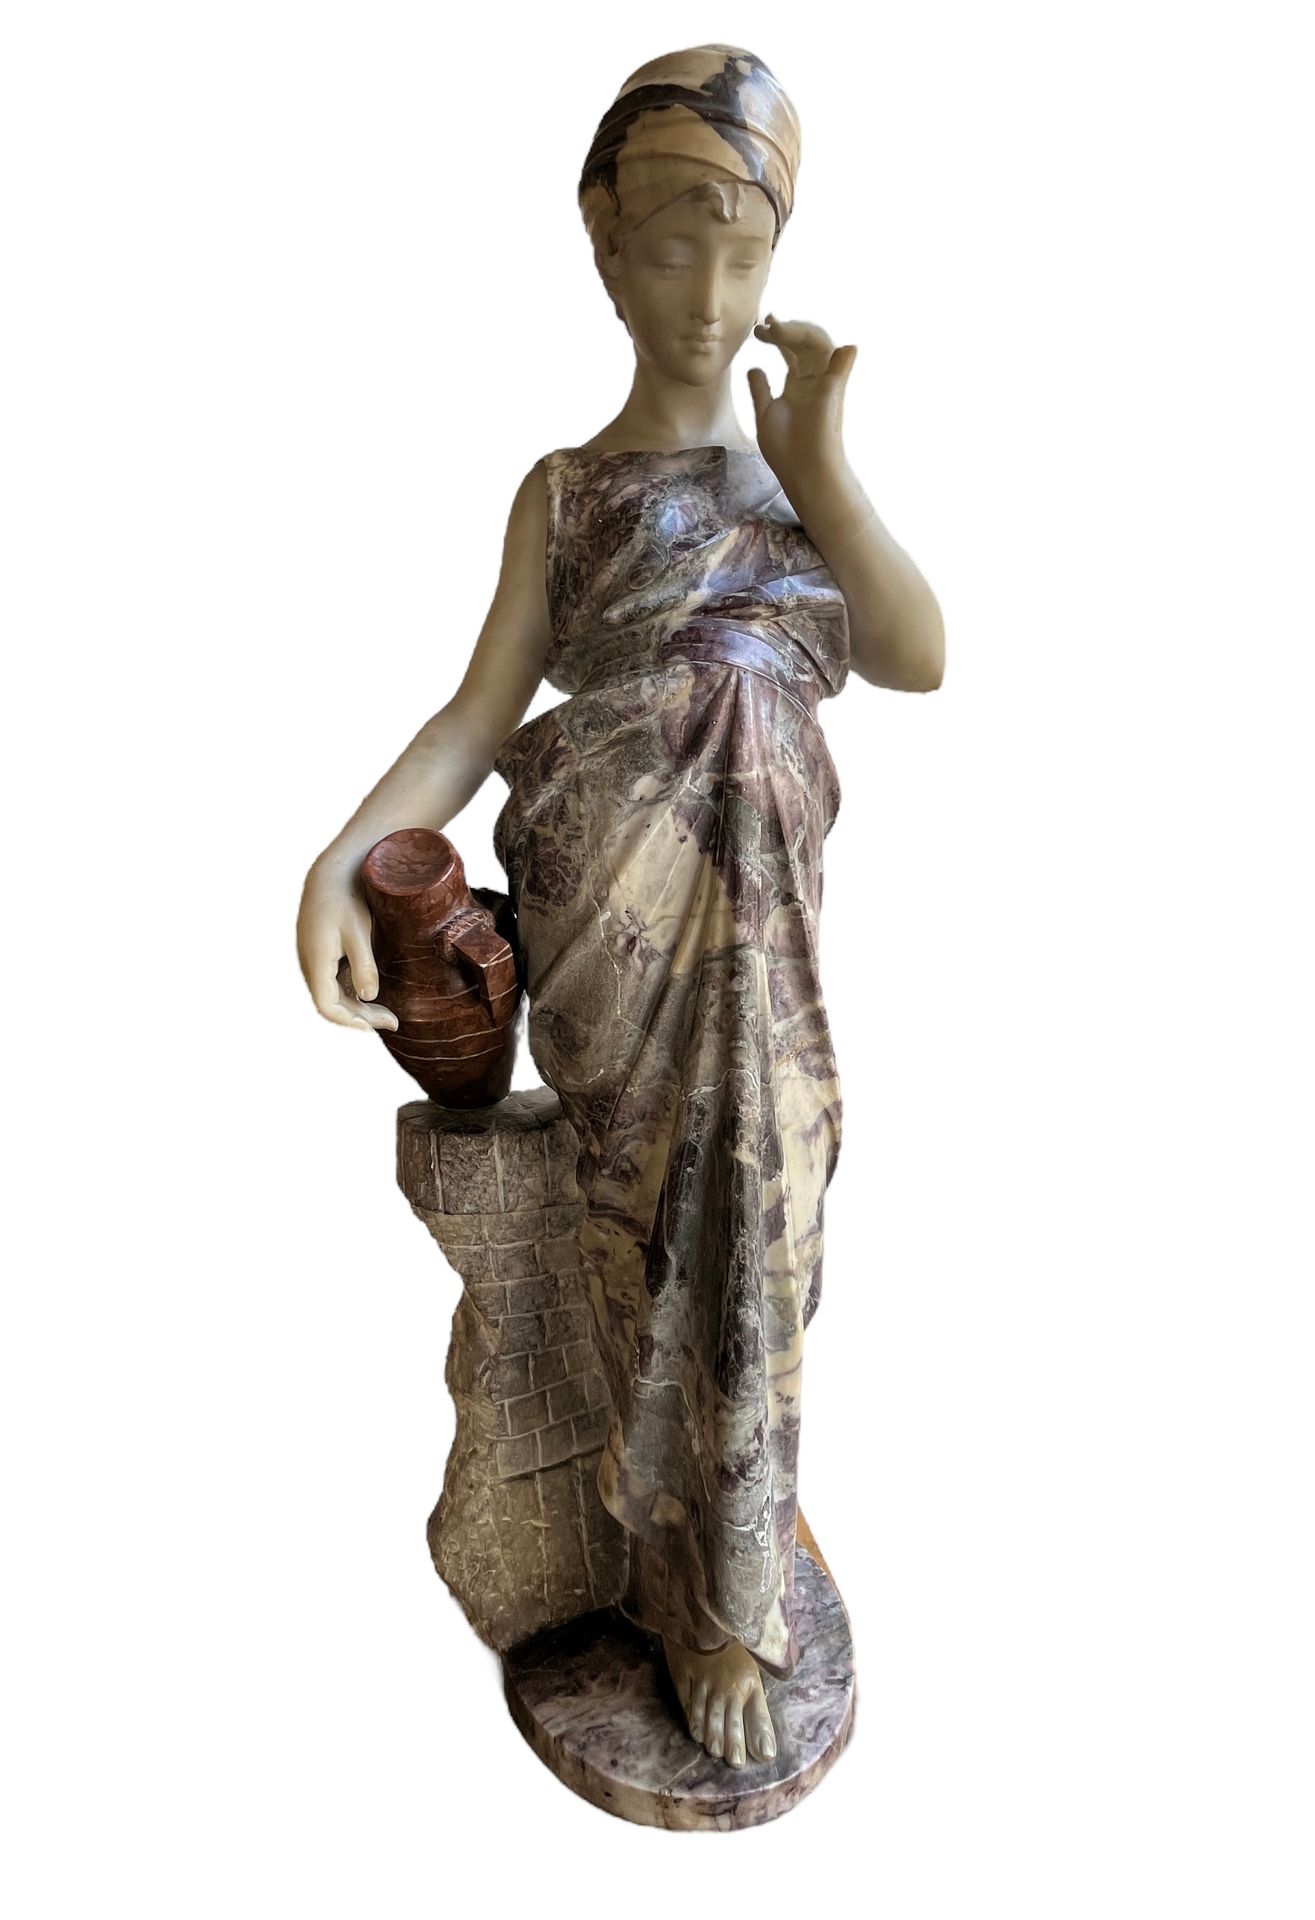 Null Guglielmo PUGI c.1850-1915
Rebecca au puit
Sculpture en marbre de carrare, &hellip;